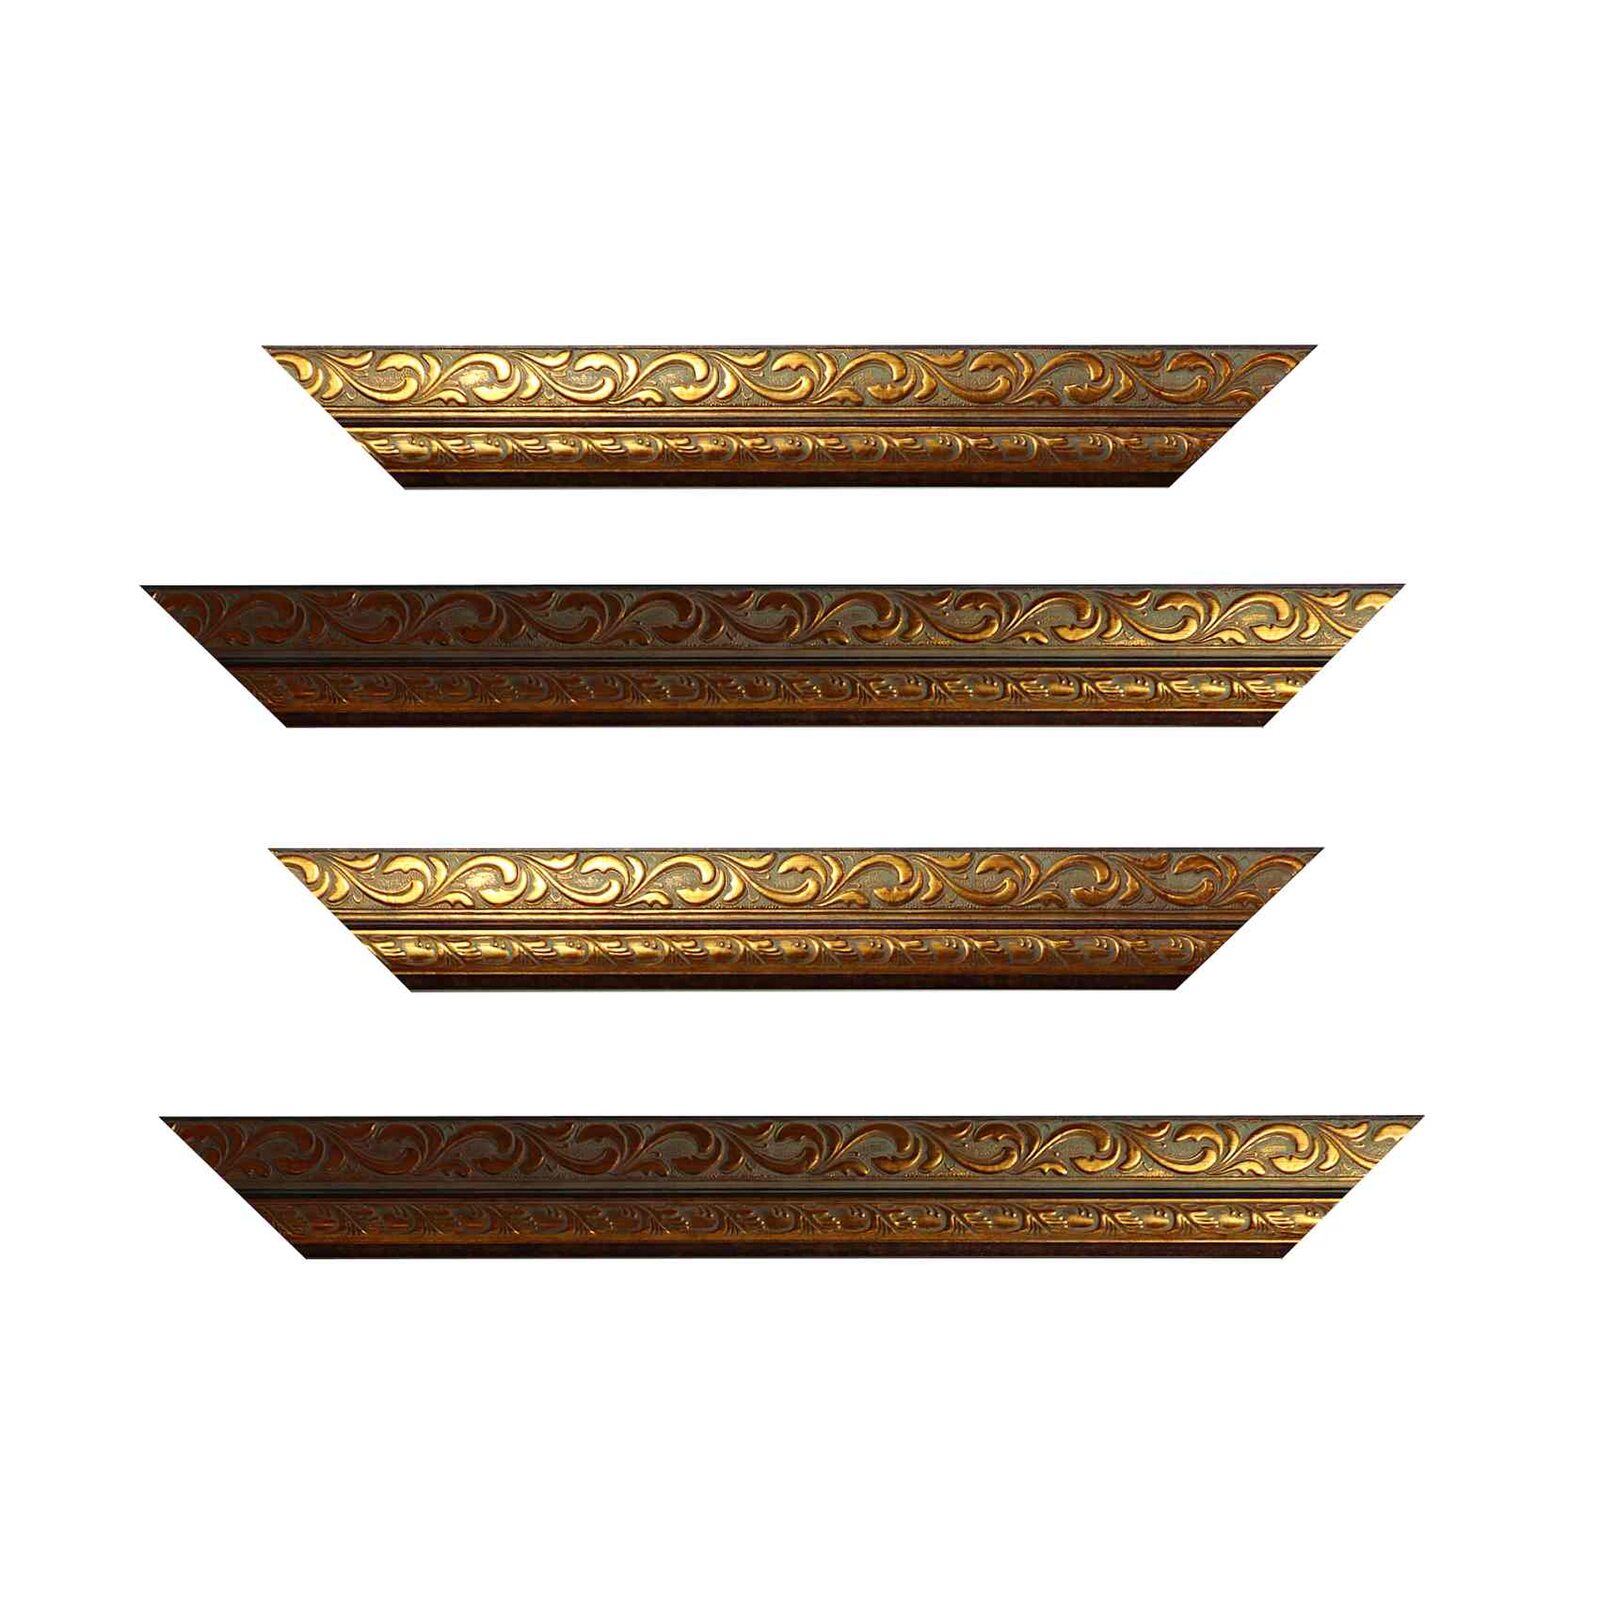 Barockrahmen gold 722 ORO verziert - in verschiedenen Varianten